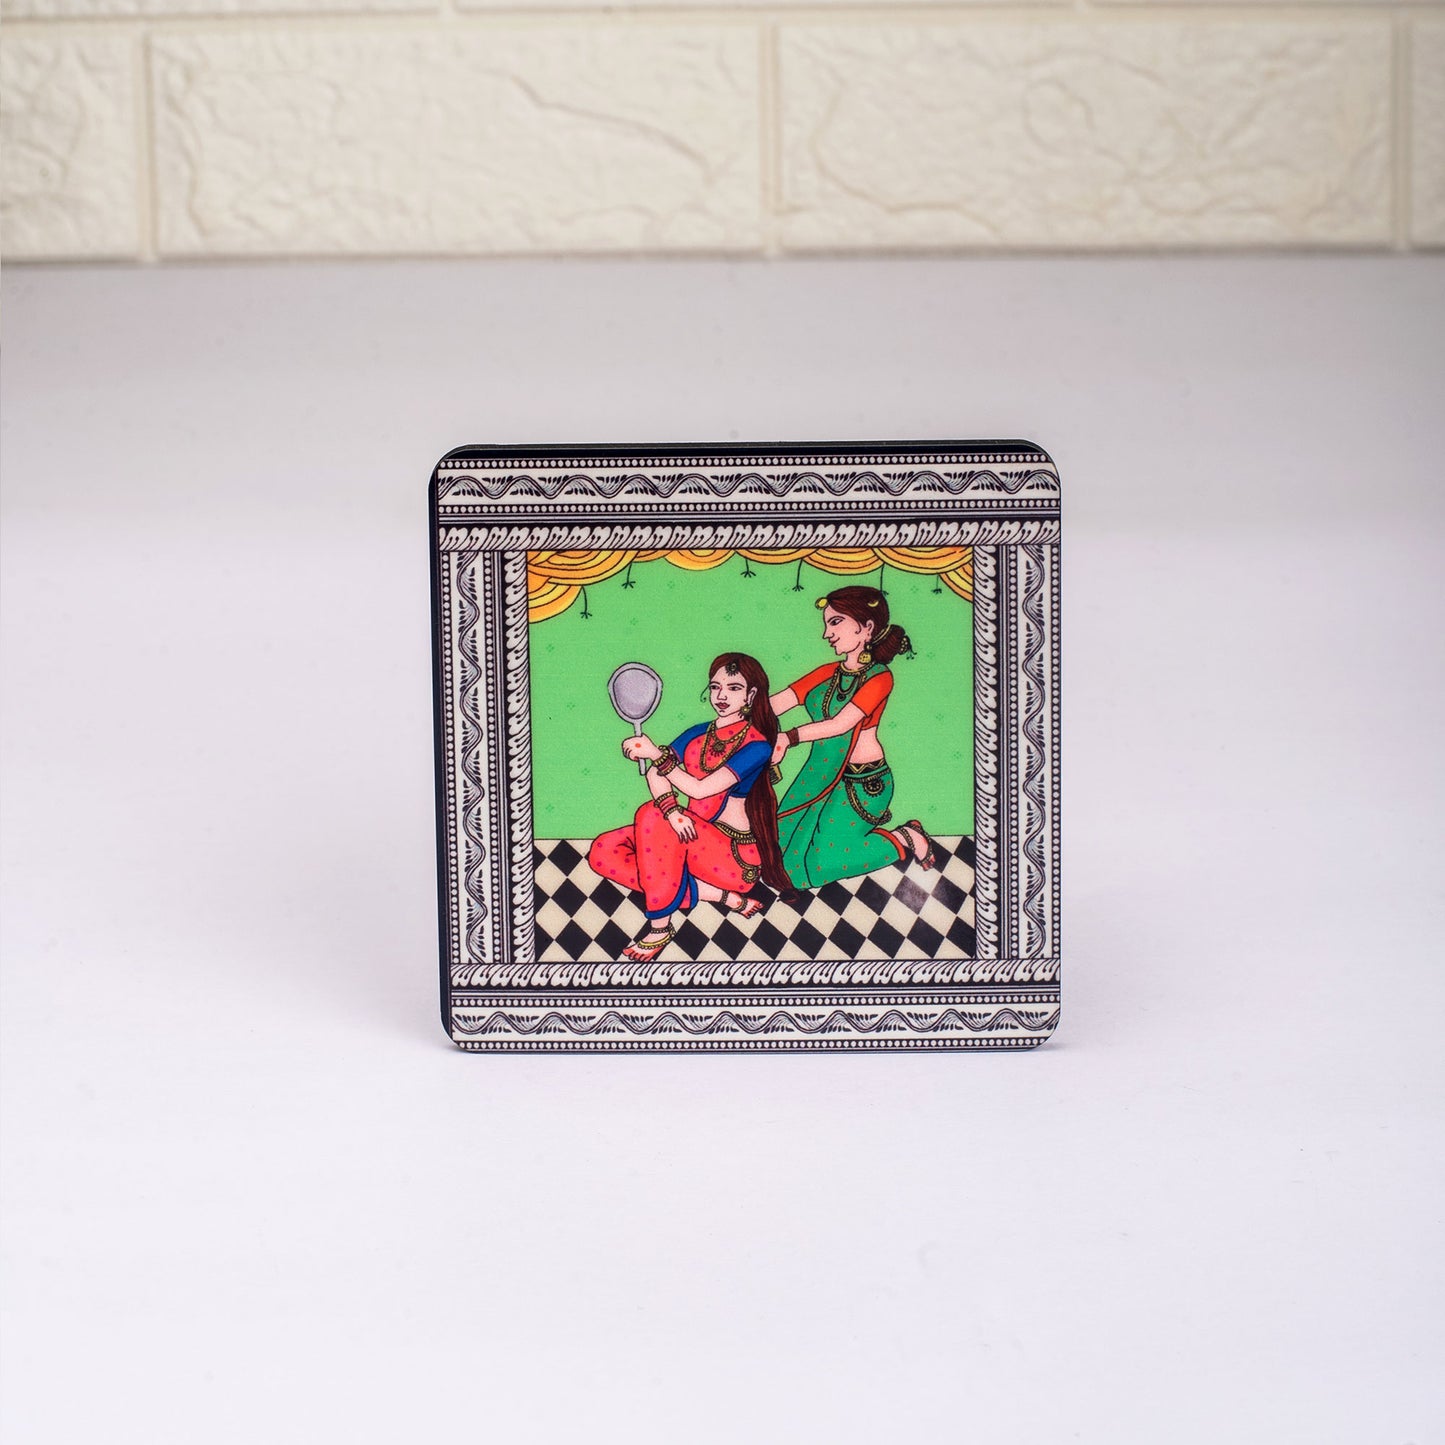 Shringaar Pattachitra Mug with Coaster - Green